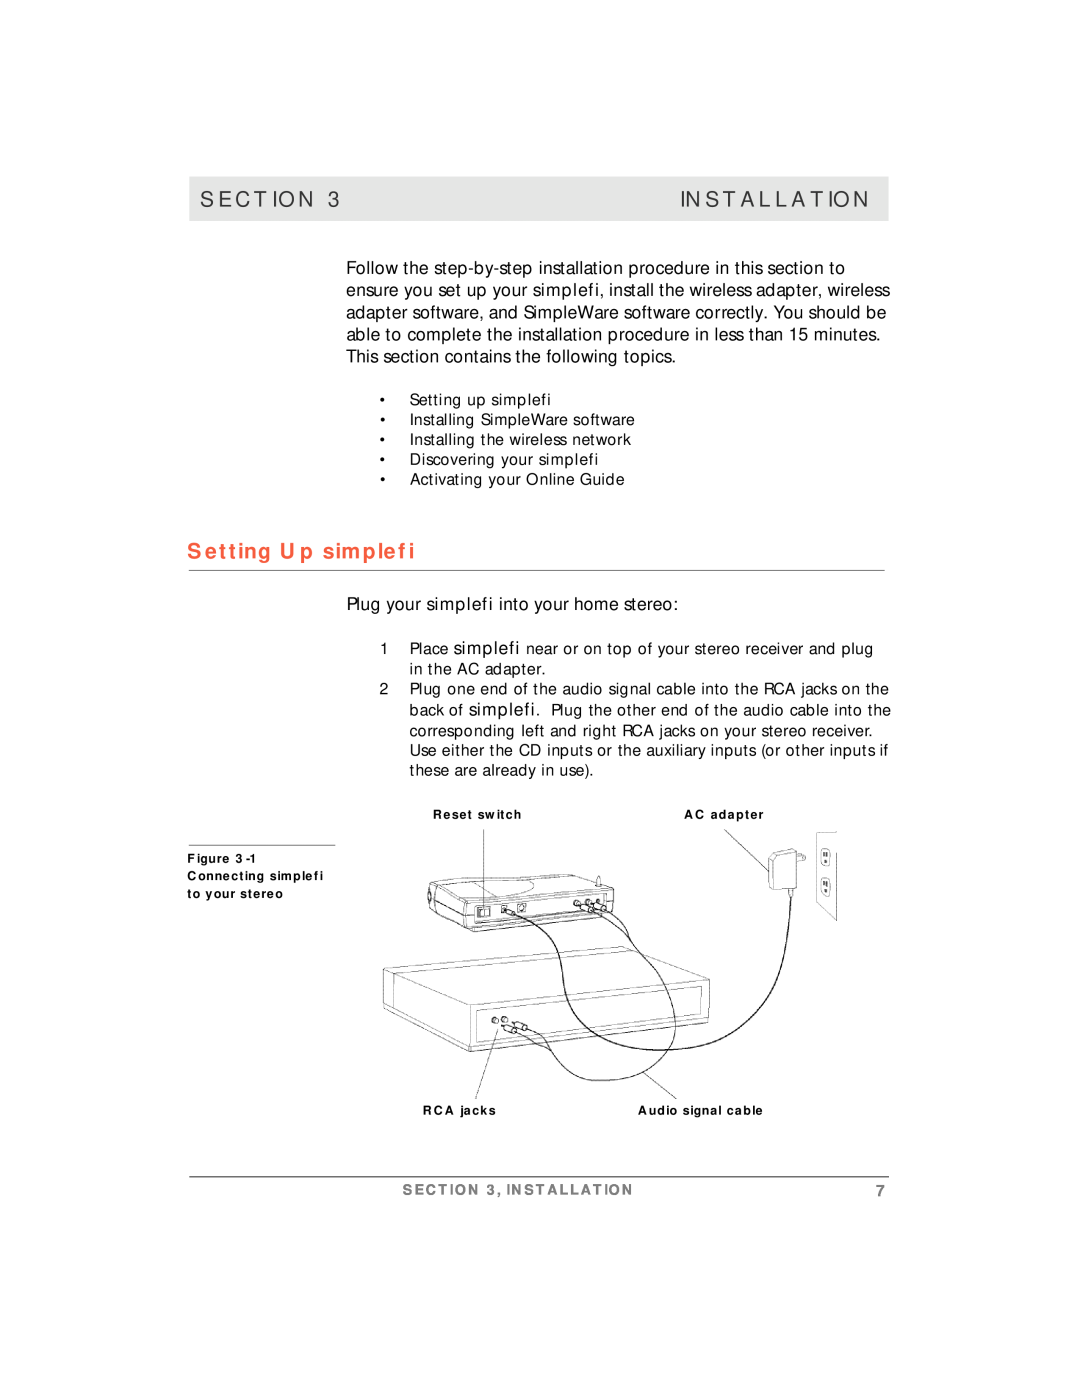 Motorola manual Installation, Setting Up simplefi, Section 